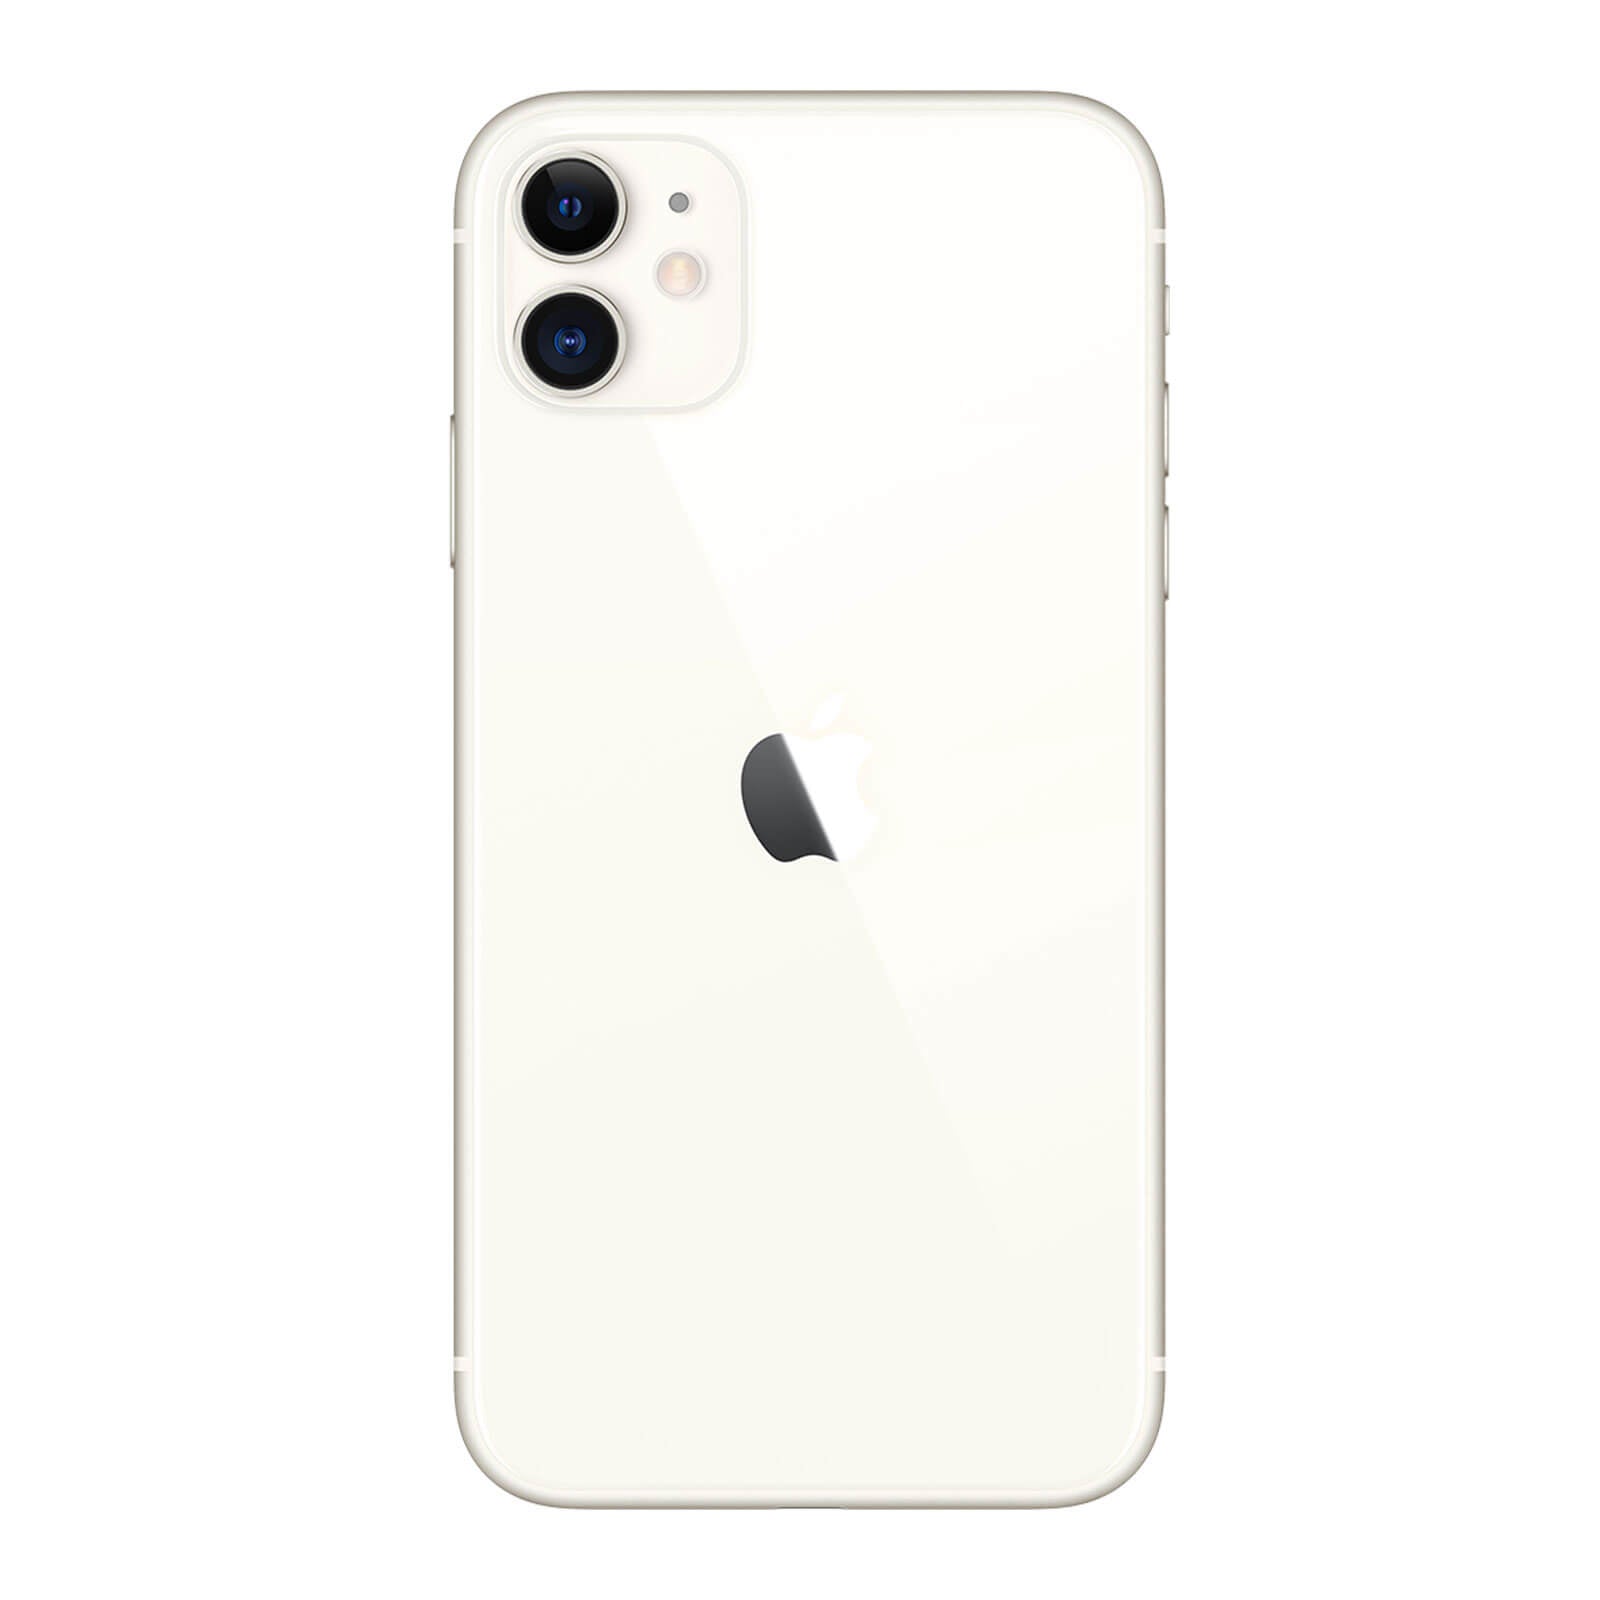 Apple iPhone 11 128GB White Fair - T-Mobile